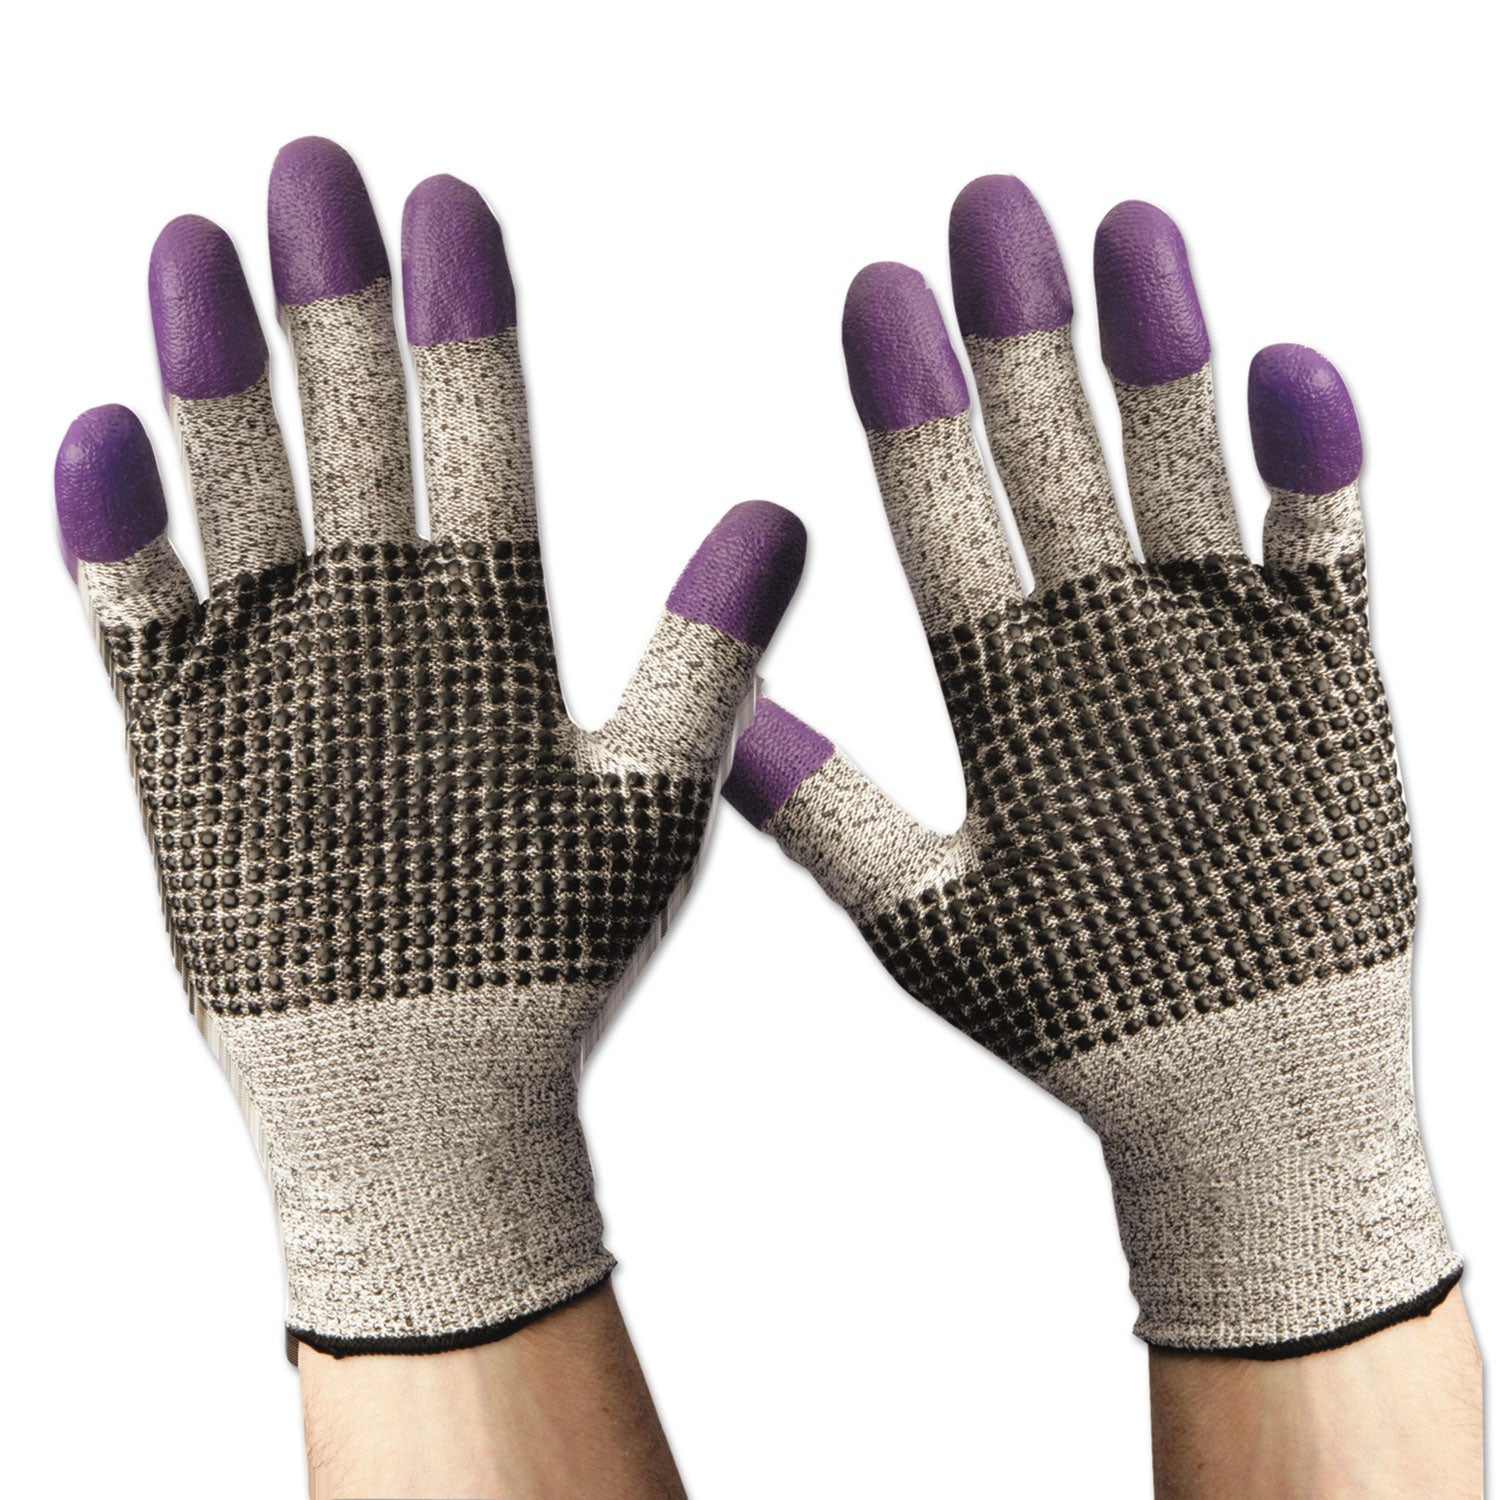 g60-purple-nitrile-gloves-240-mm-length-large-size-9-black-white-pair_kcc97432 - 5